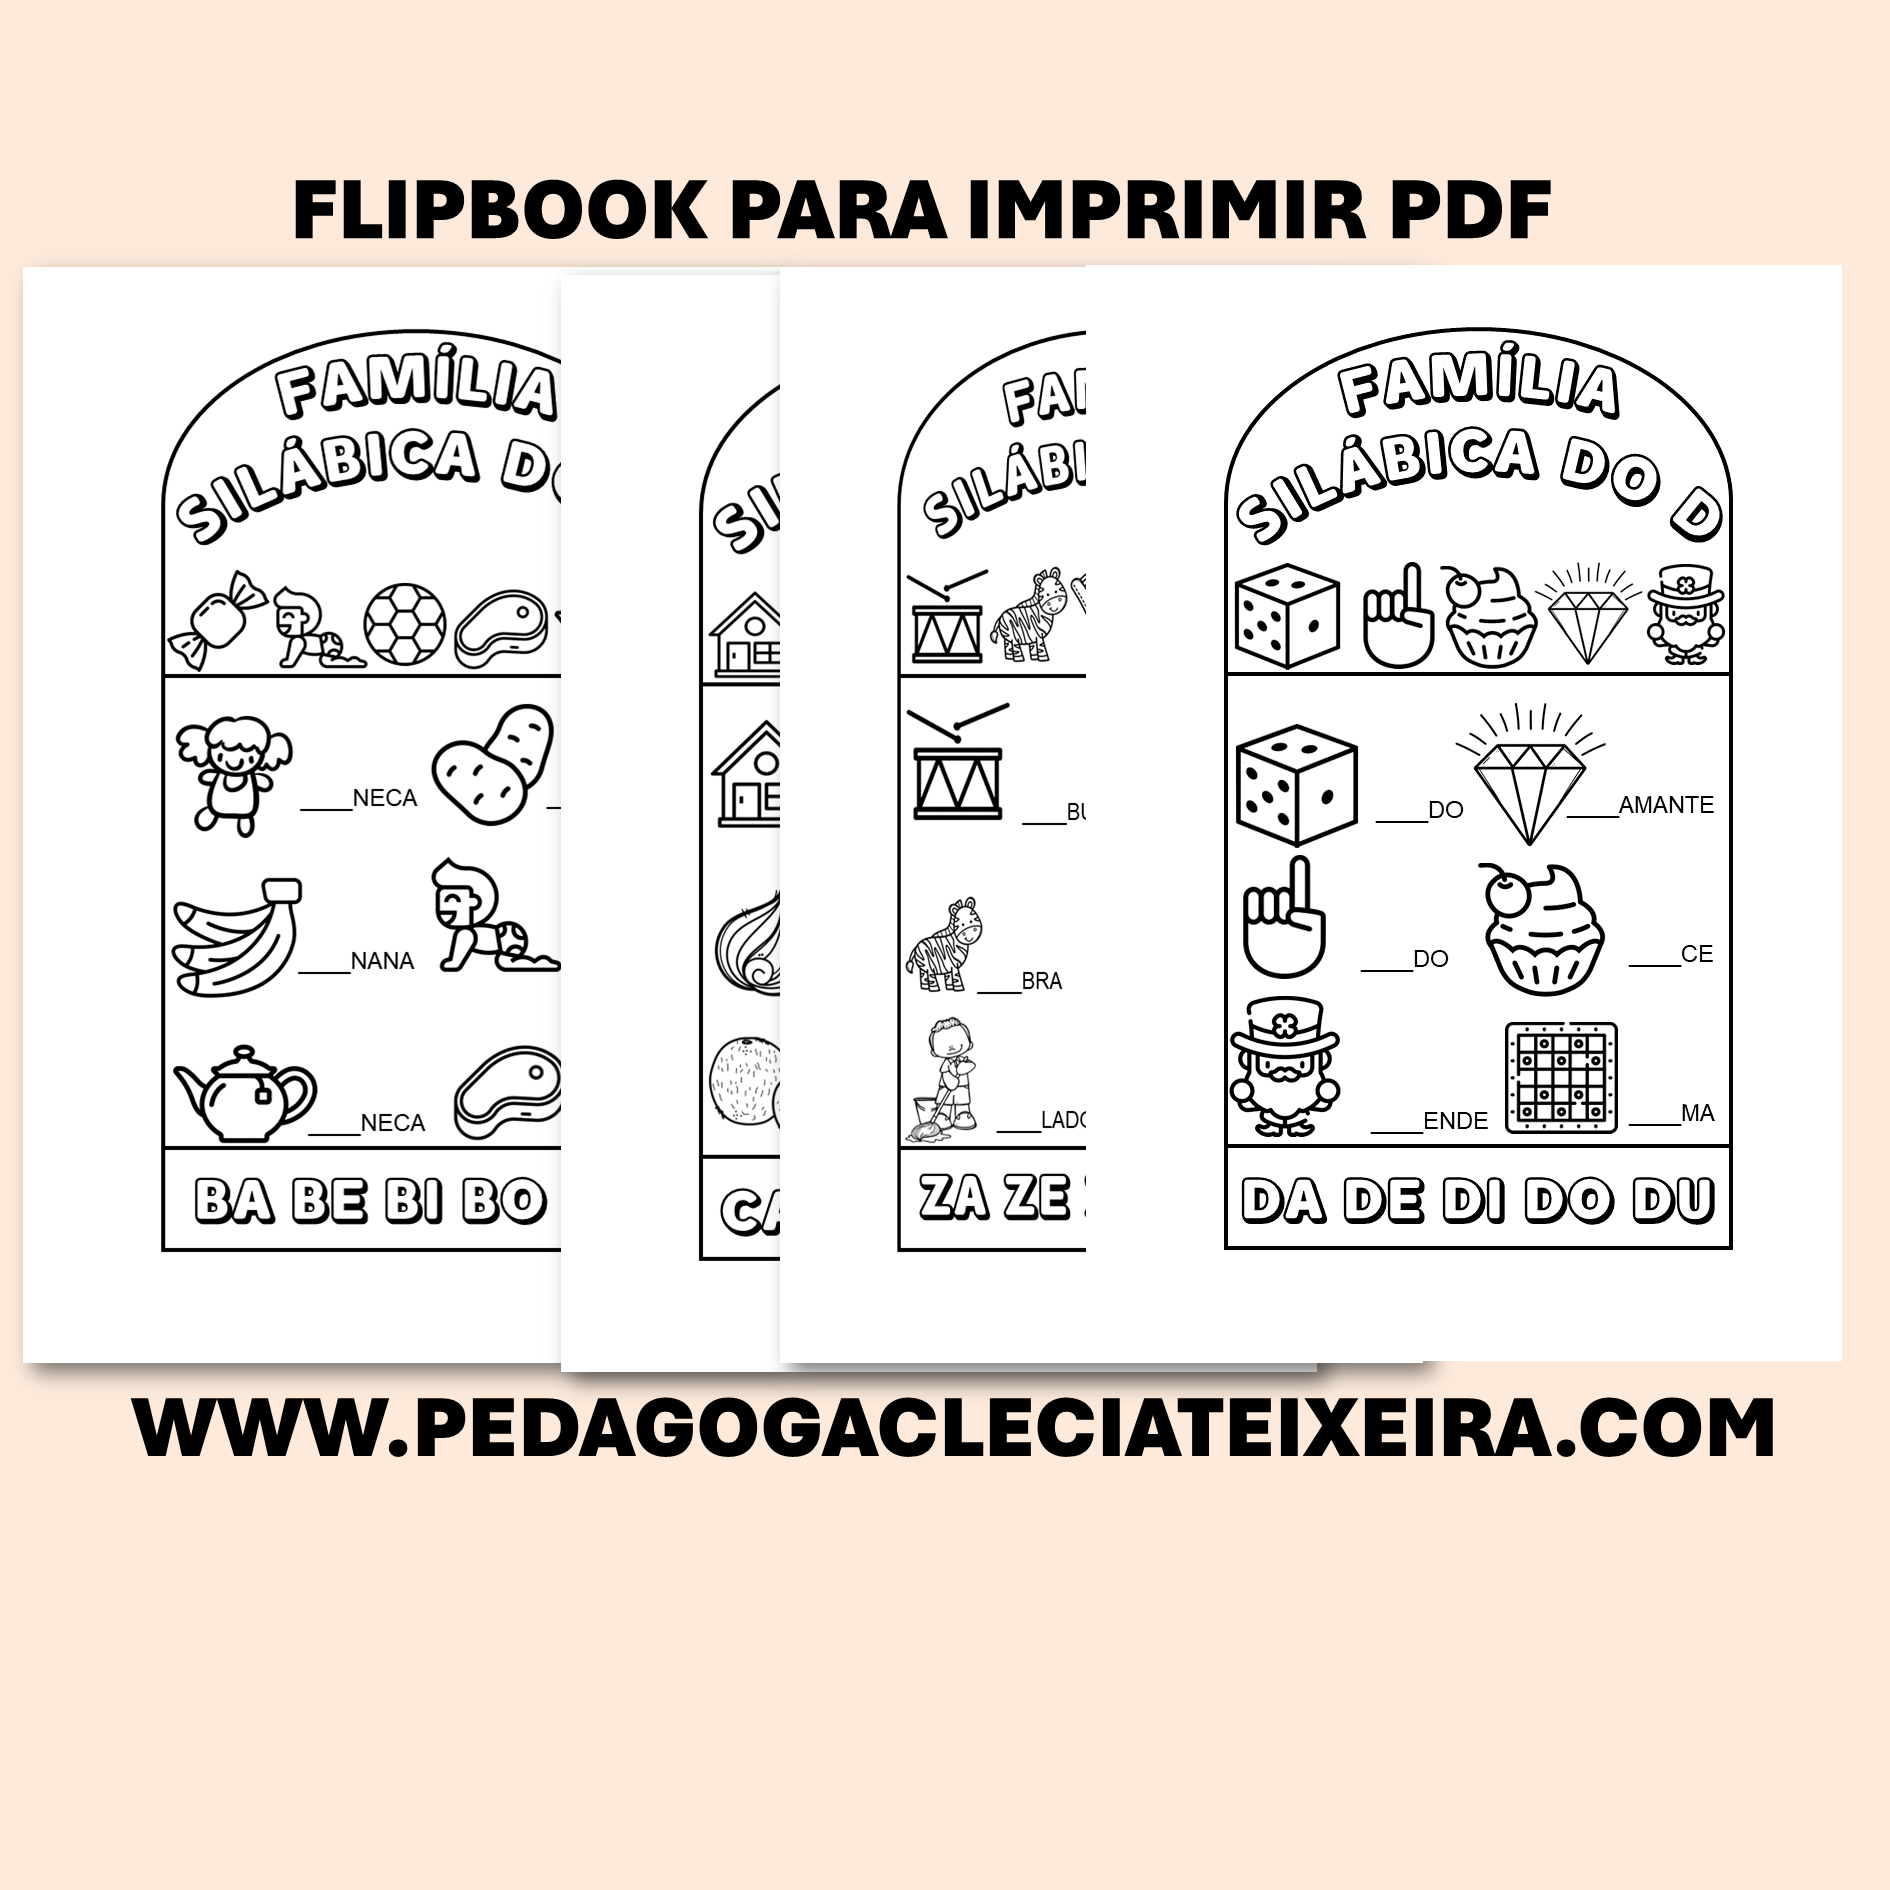 Flipbook para imprimir pdf